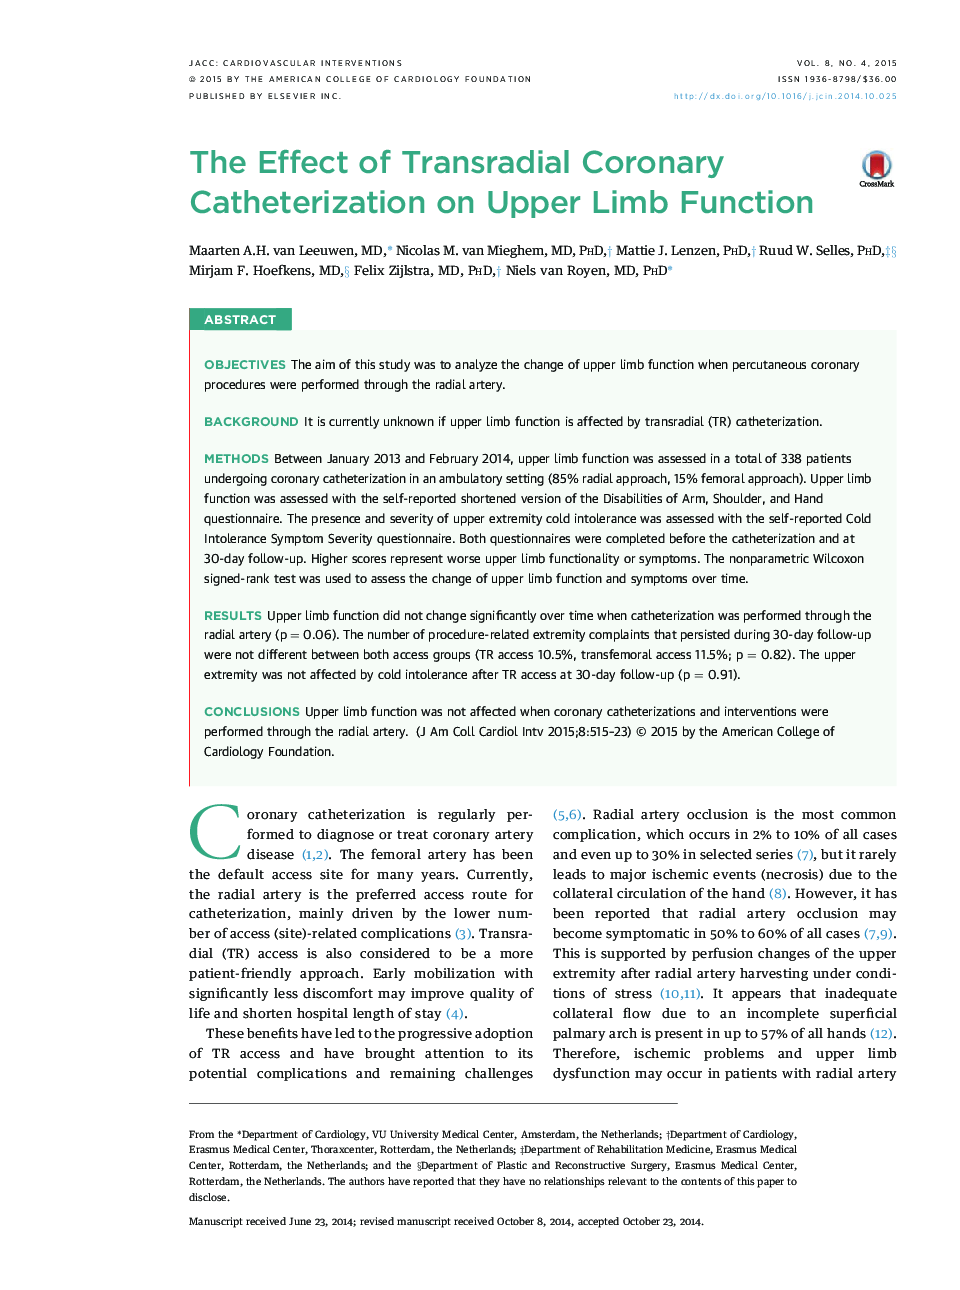 The Effect of Transradial Coronary Catheterization on Upper Limb Function 